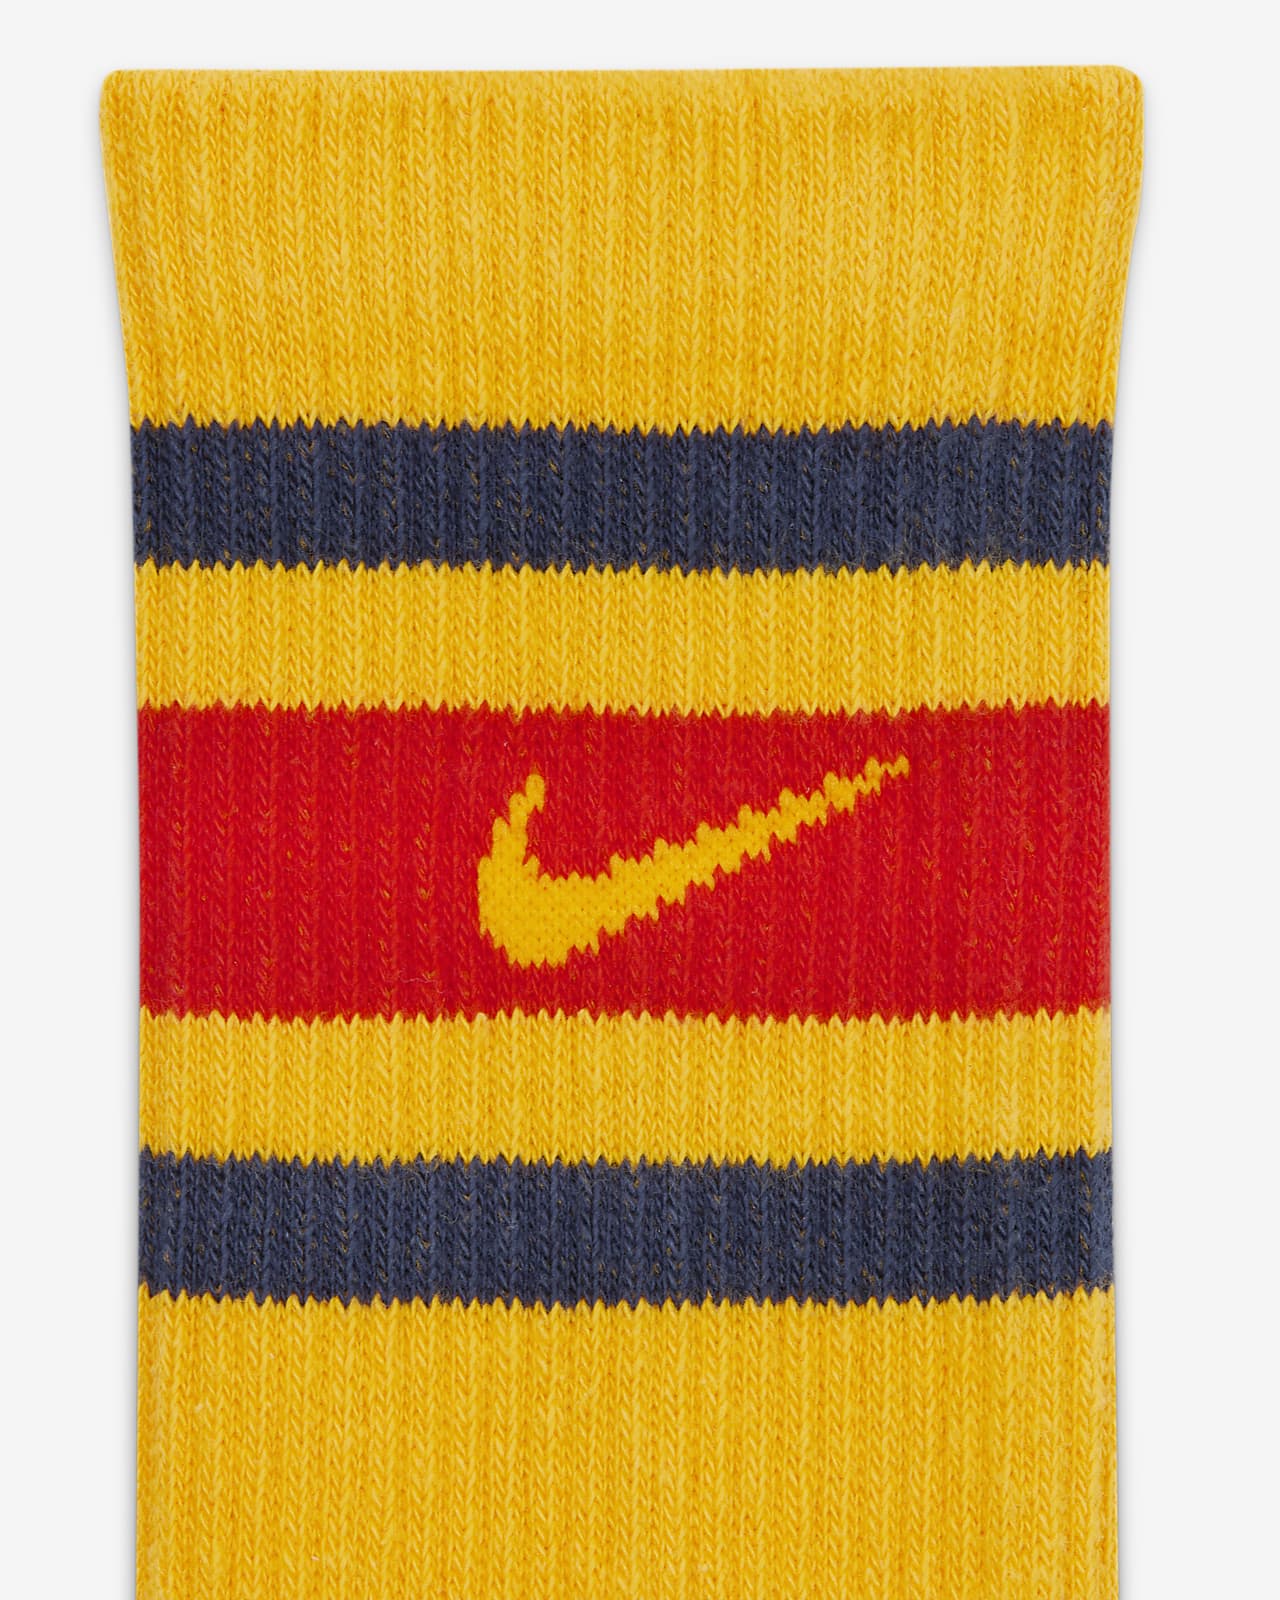 Nike Everyday Plus Cushioned Crew Socks (3 Pairs)